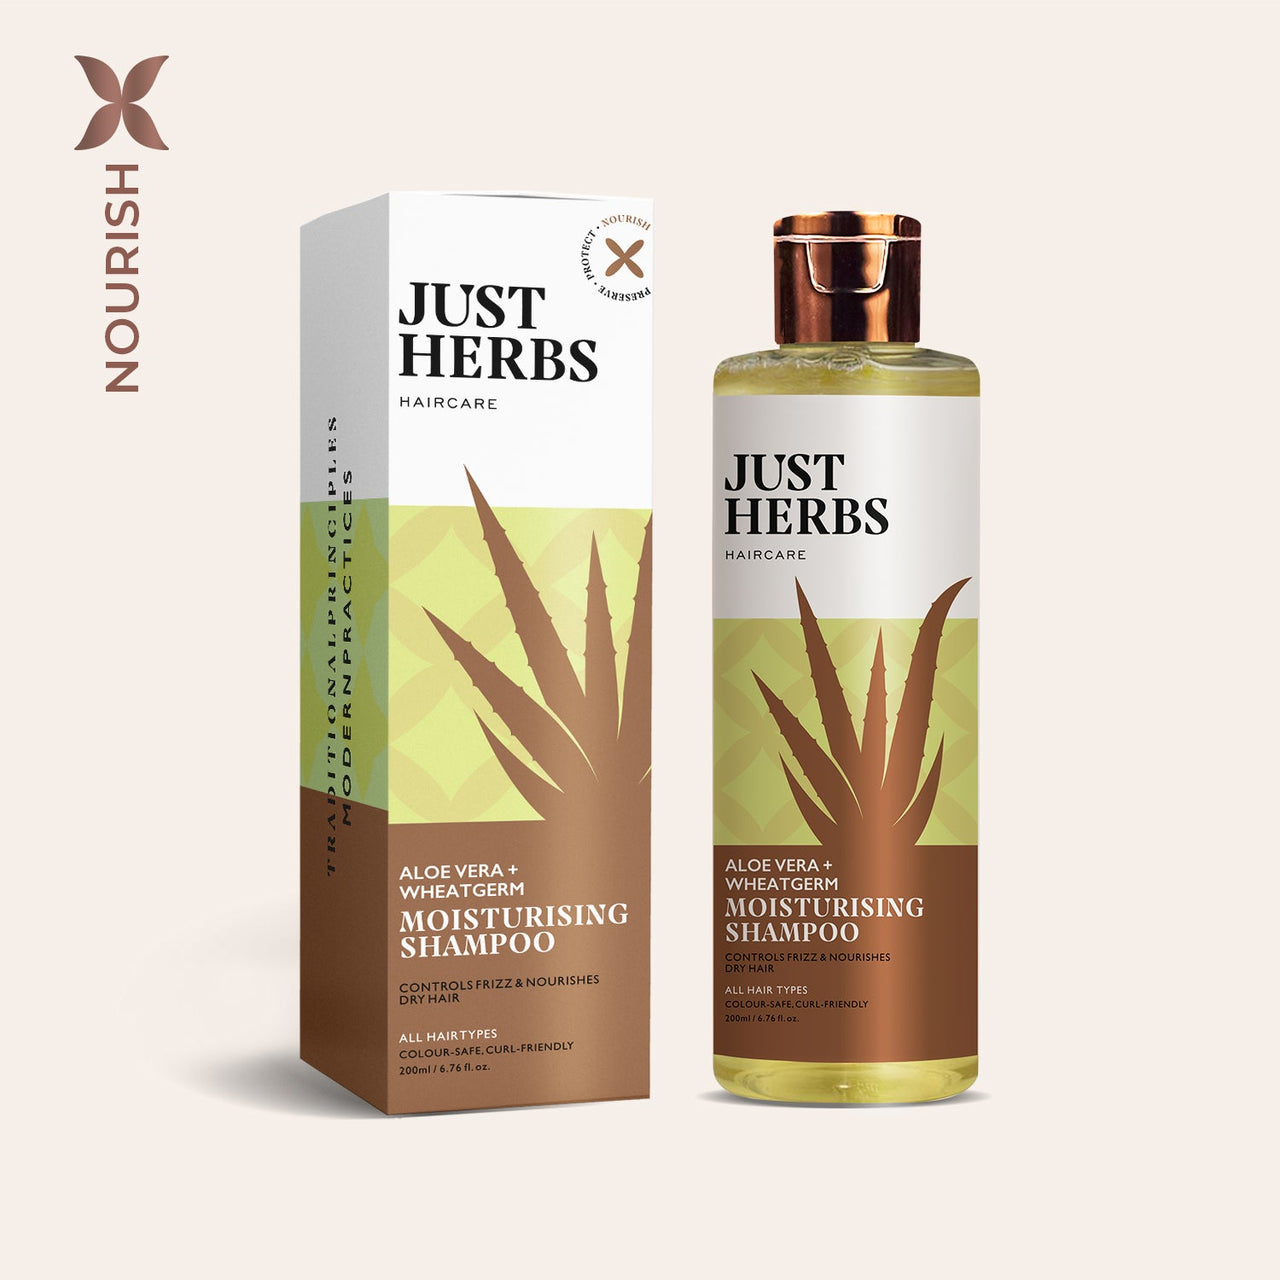 Moisturising Shampoo with Aloe Vera and Wheatgerm - Just Herbs